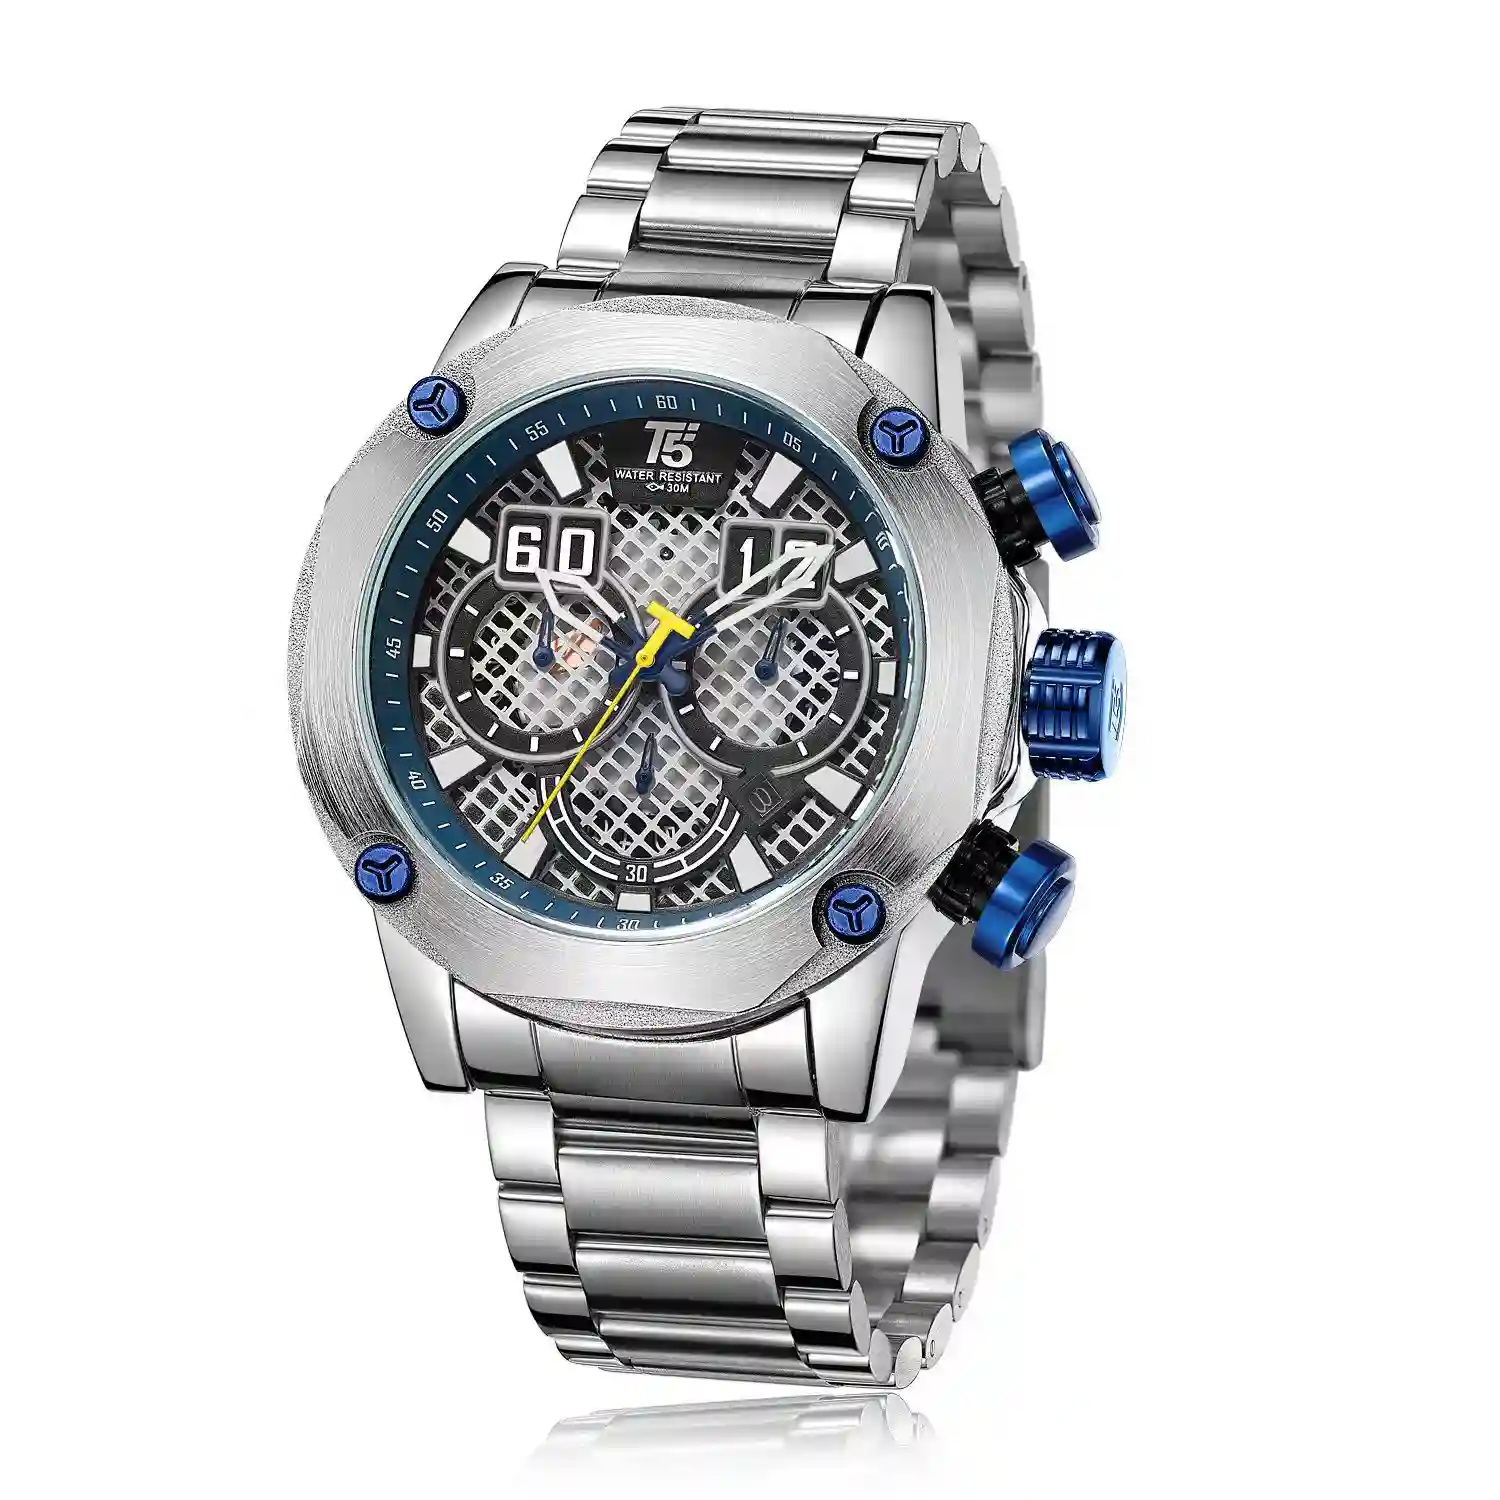 T5 SPORTS WATCH - Jewelry - Watches - 104888522